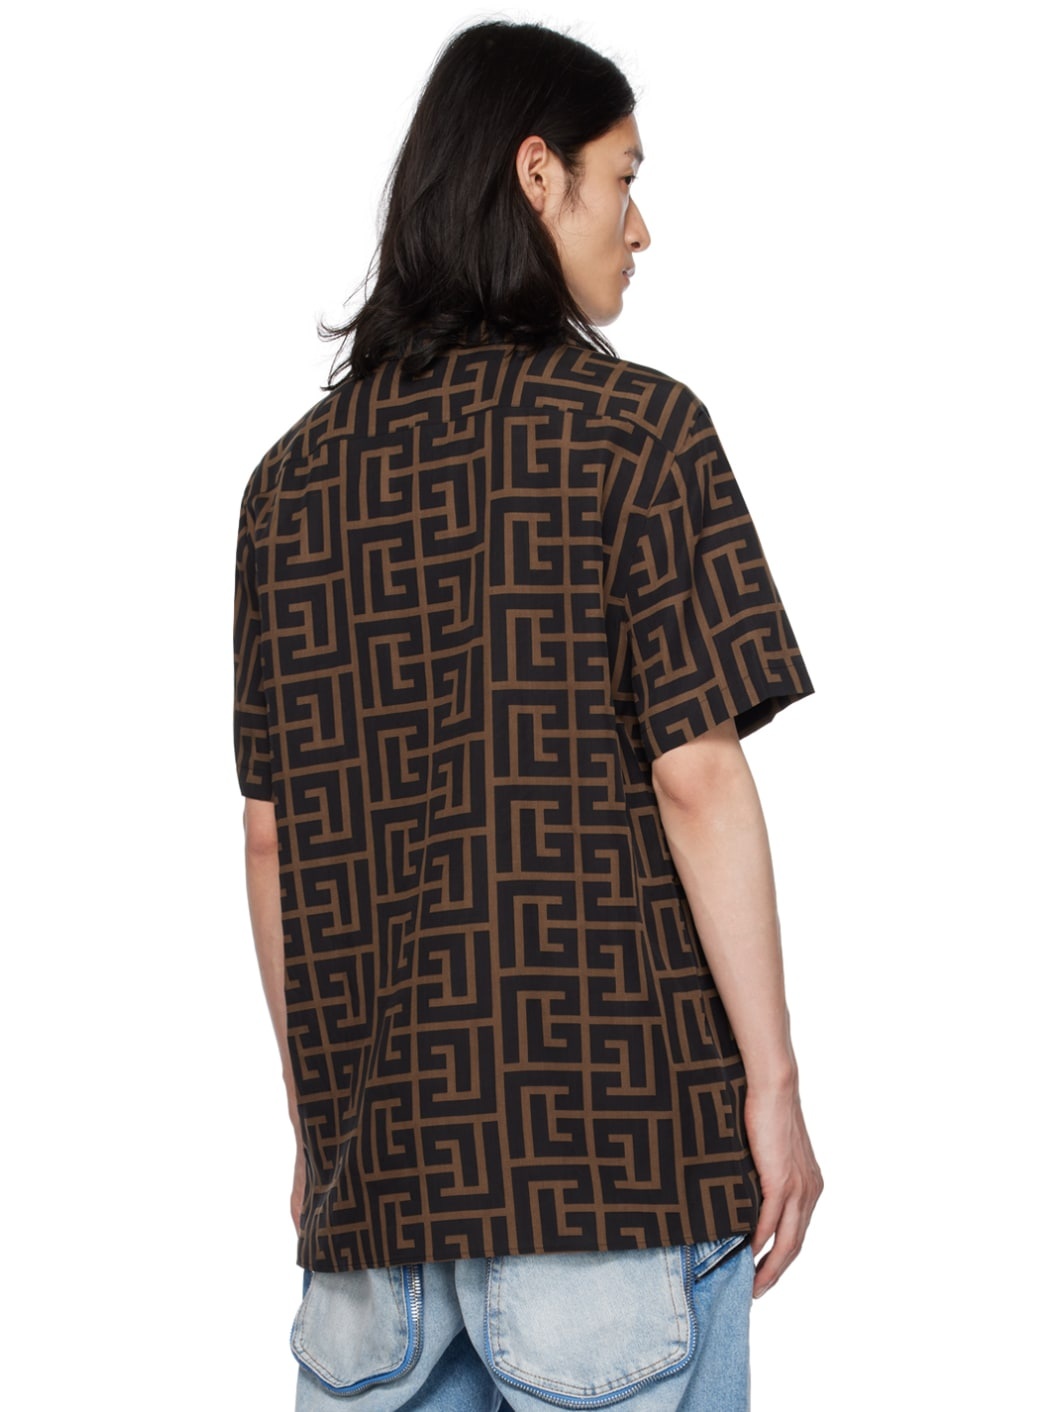 Brown & Black Printed Shirt - 3